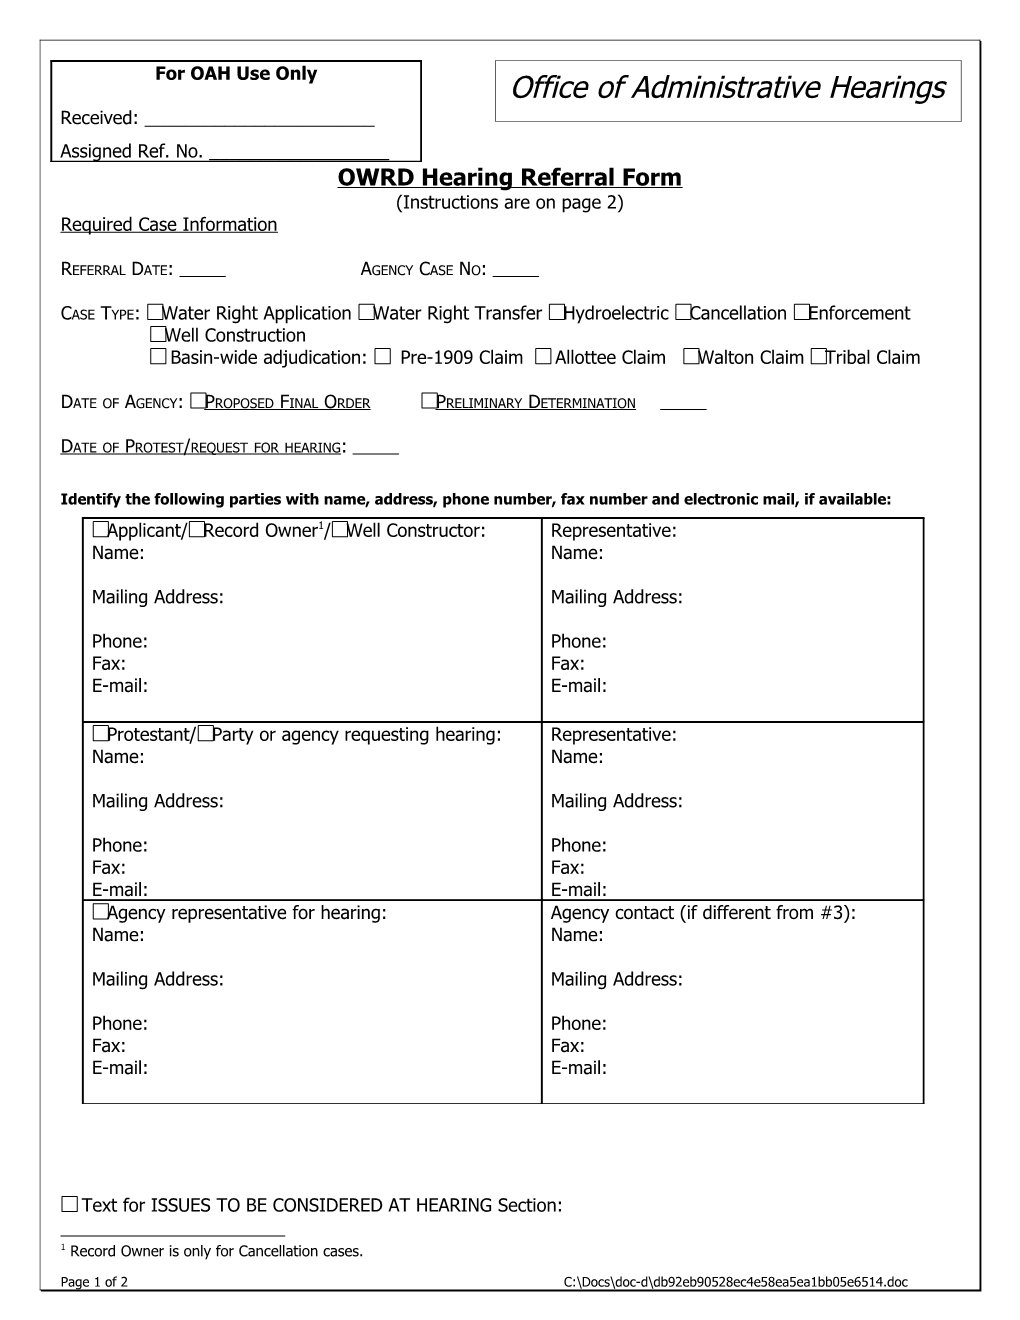 OWRD Hearing Referral Form